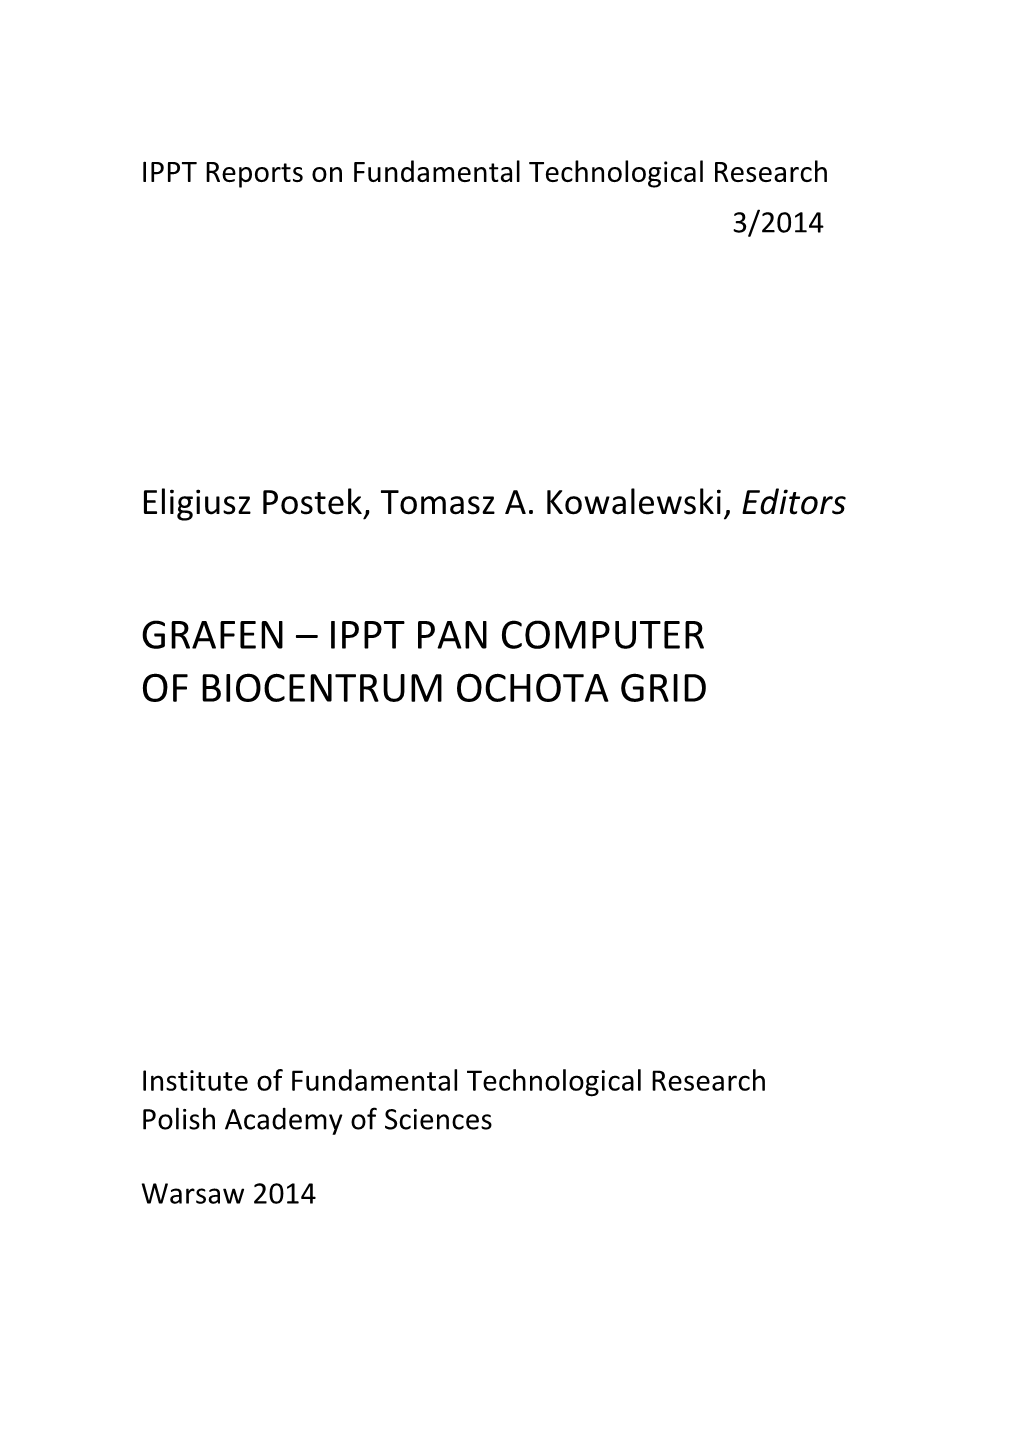 Grafen – Ippt Pan Computer of Biocentrum Ochota Grid